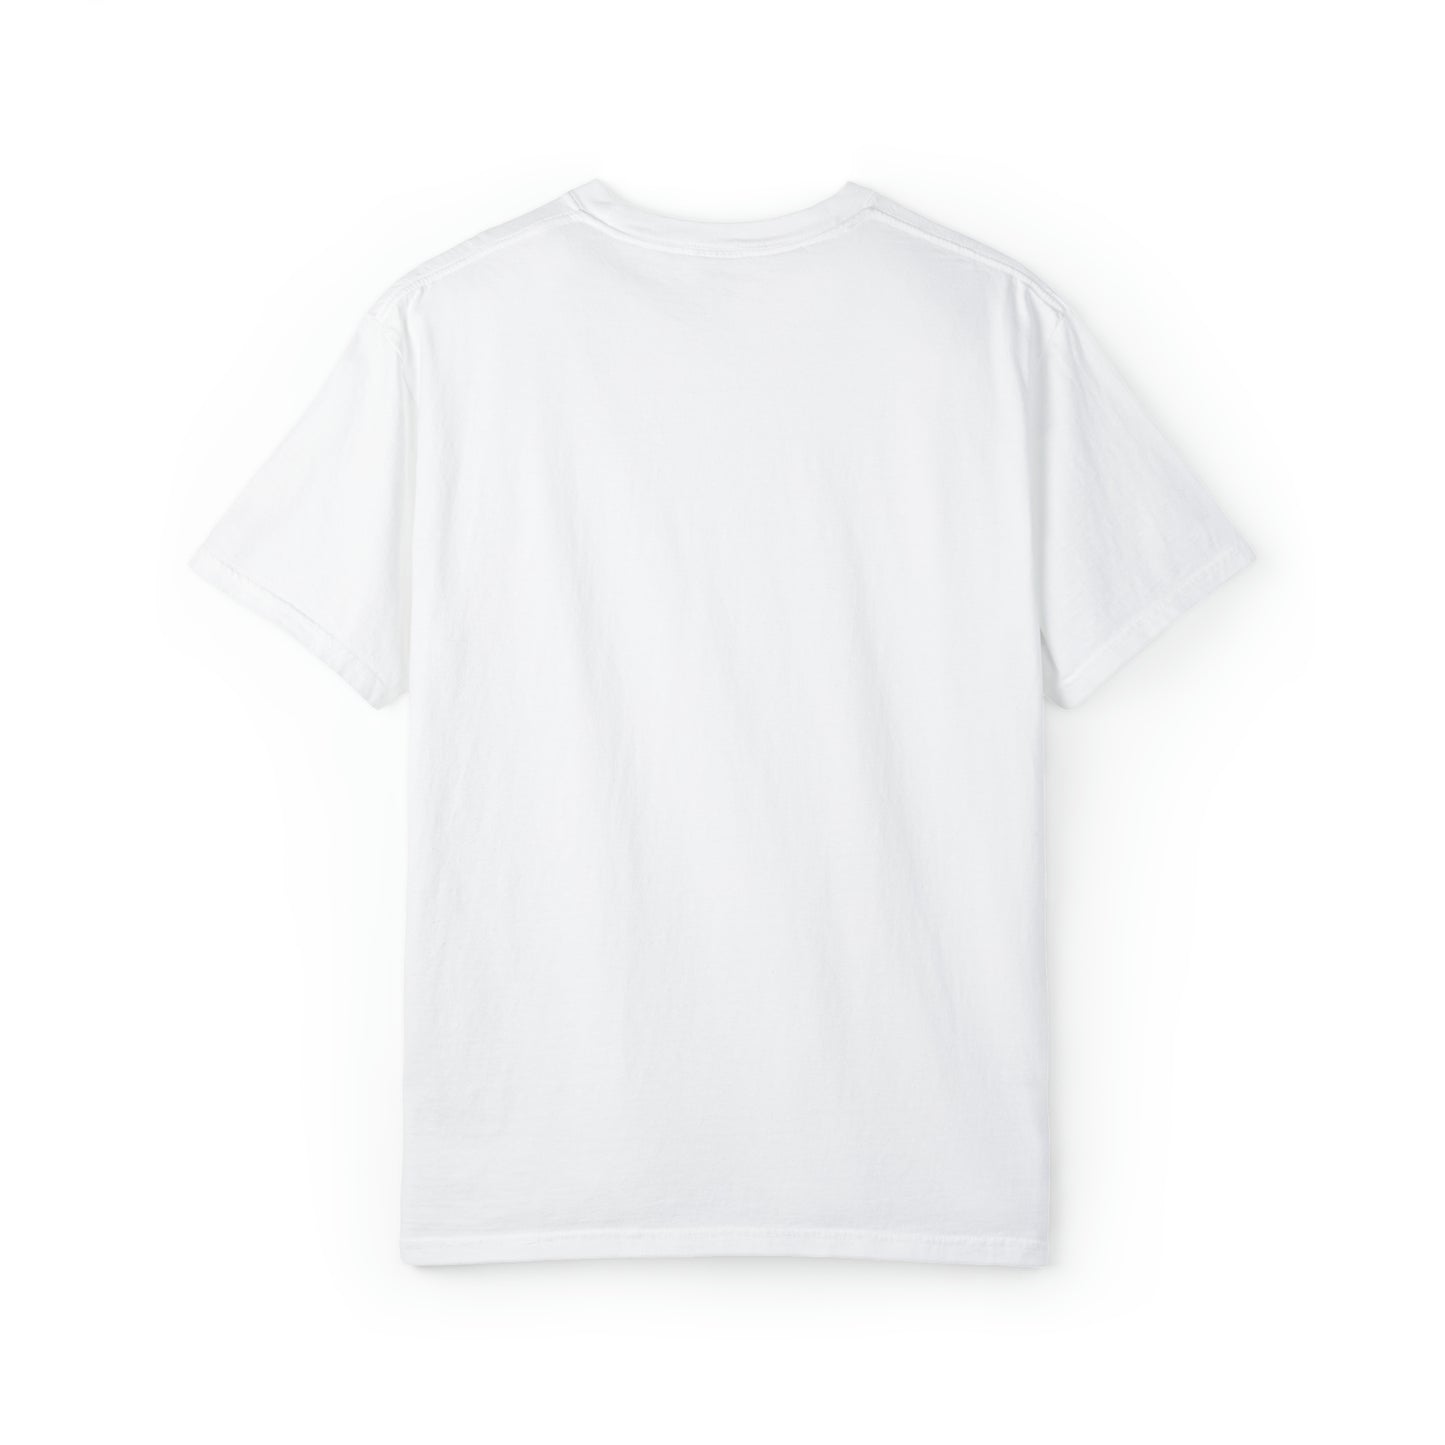 Make Today Epic - Unisex Garment-Dyed T-shirt